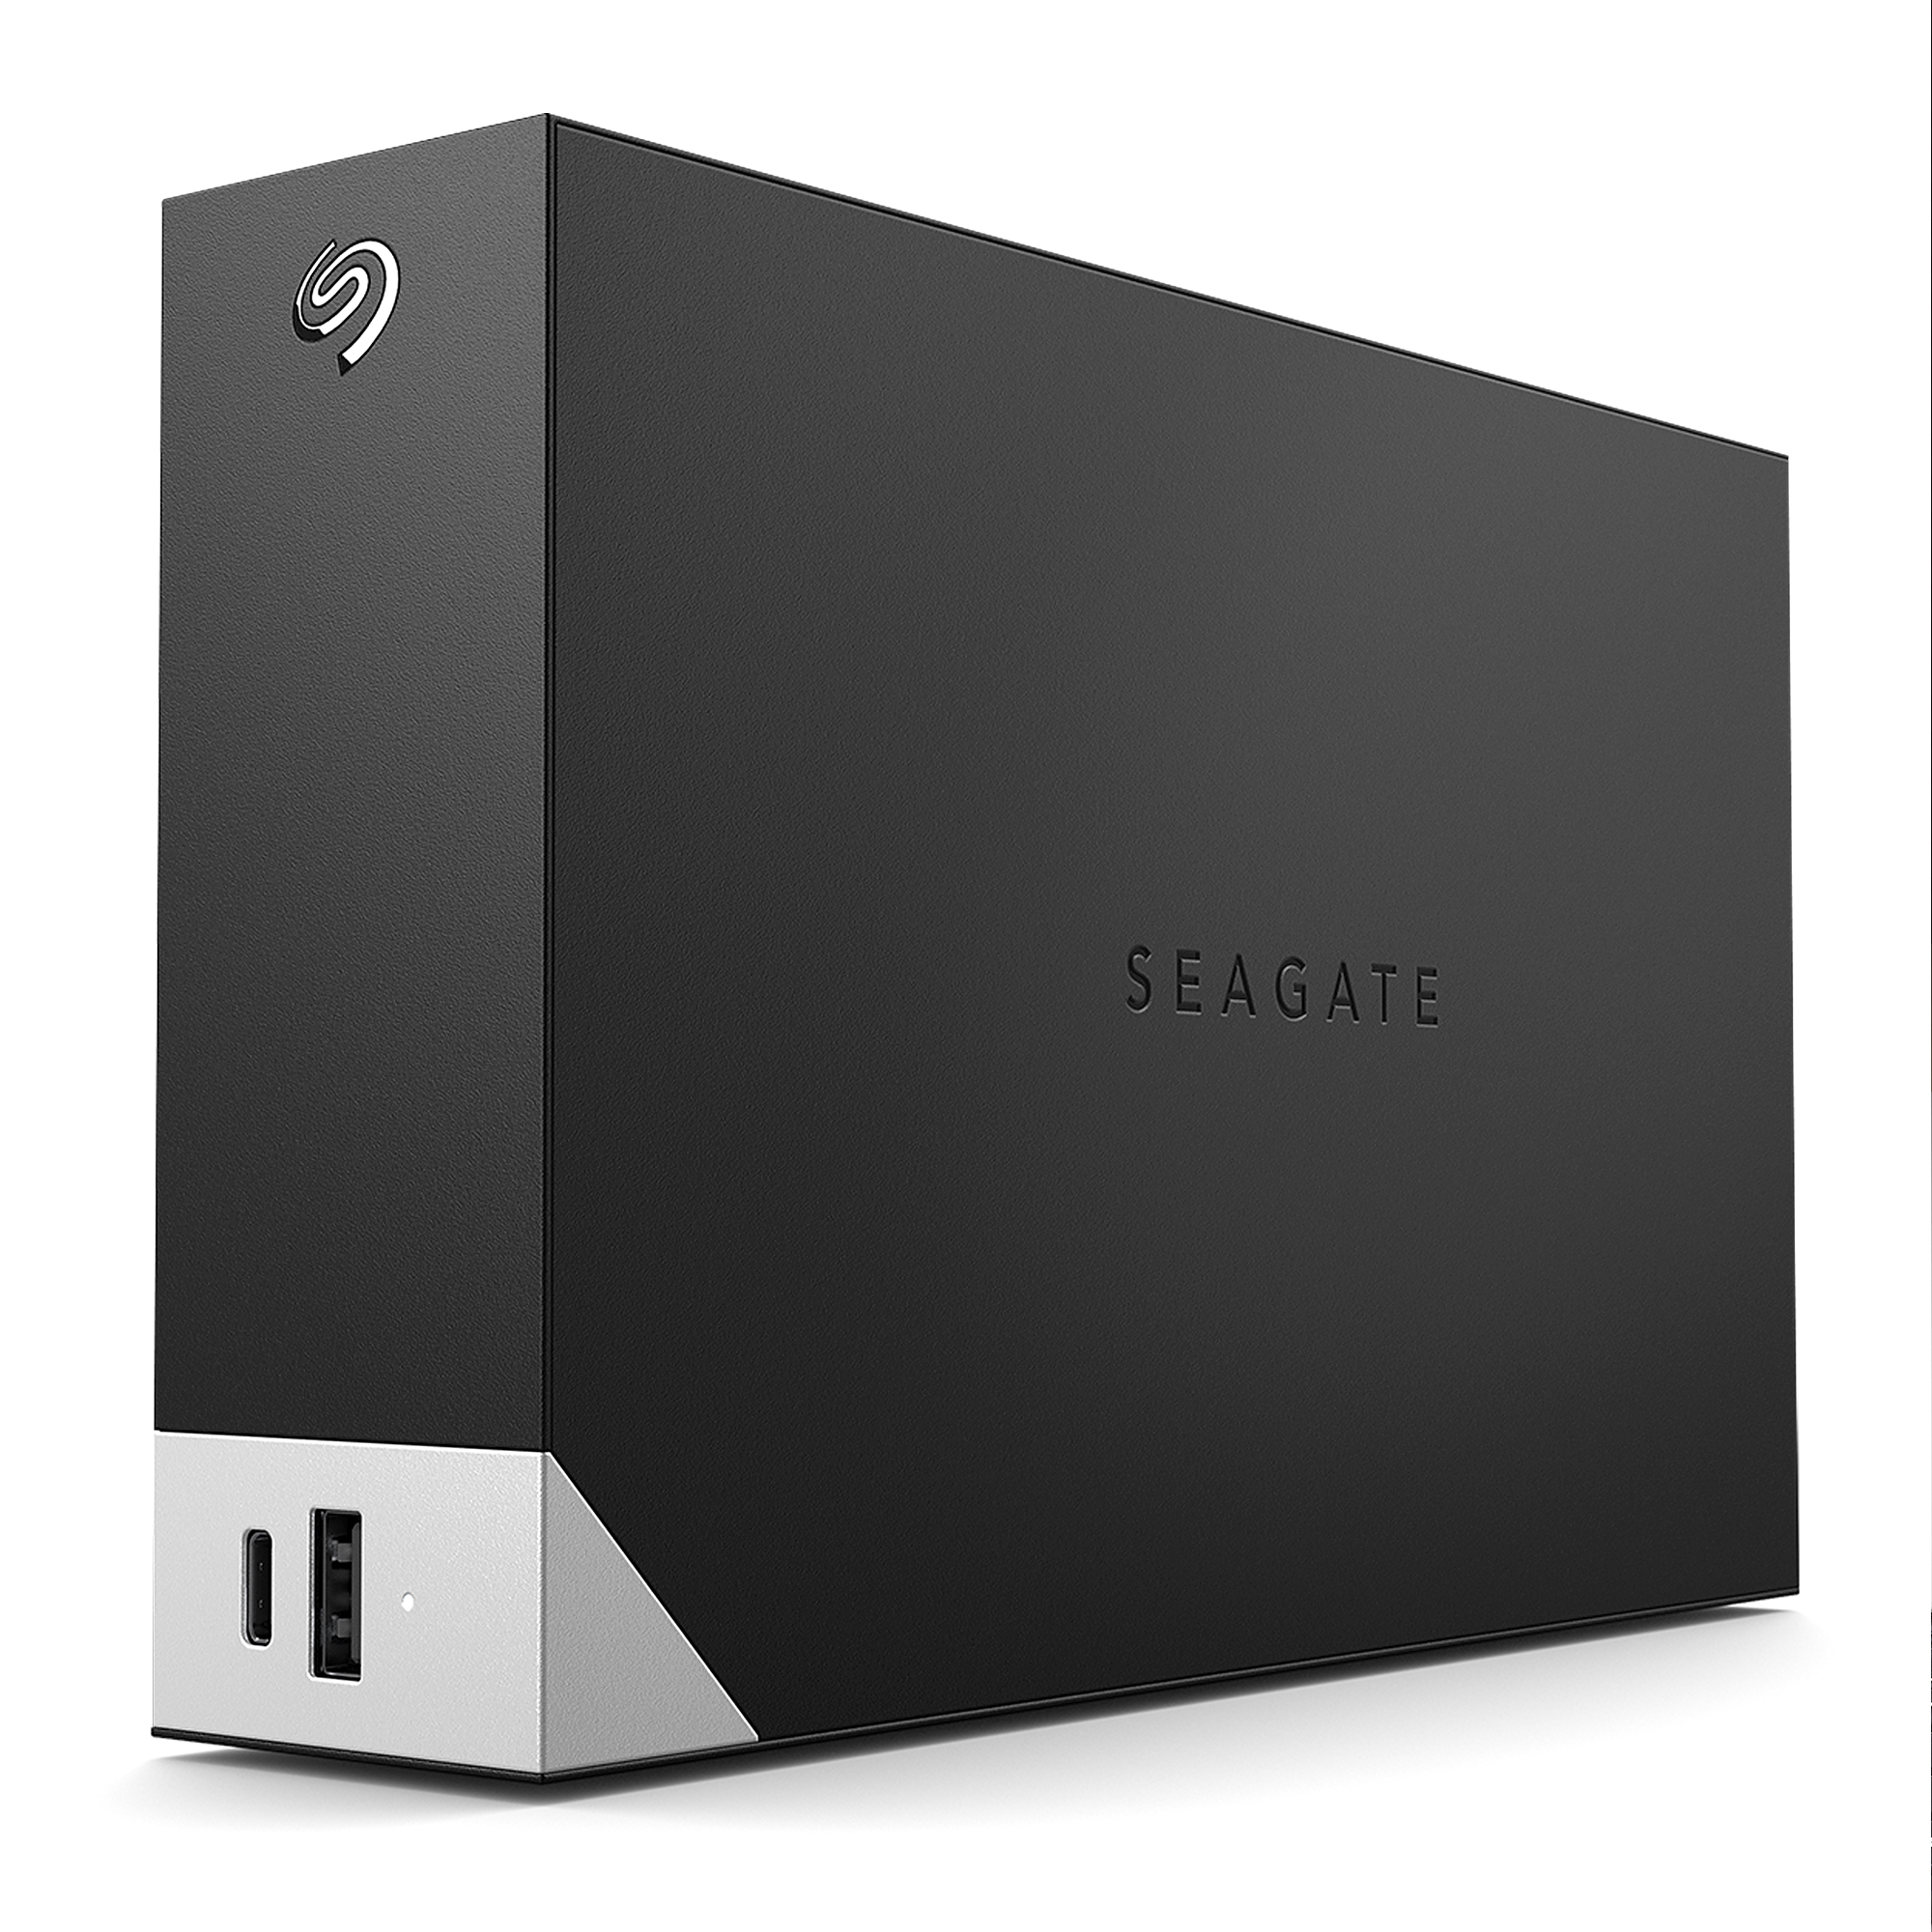 Seagate One Touch Hub 18TB External USB-C and USB 3.0 Desktop Hard Drive  - Black (STLC18000400) - image 1 of 10